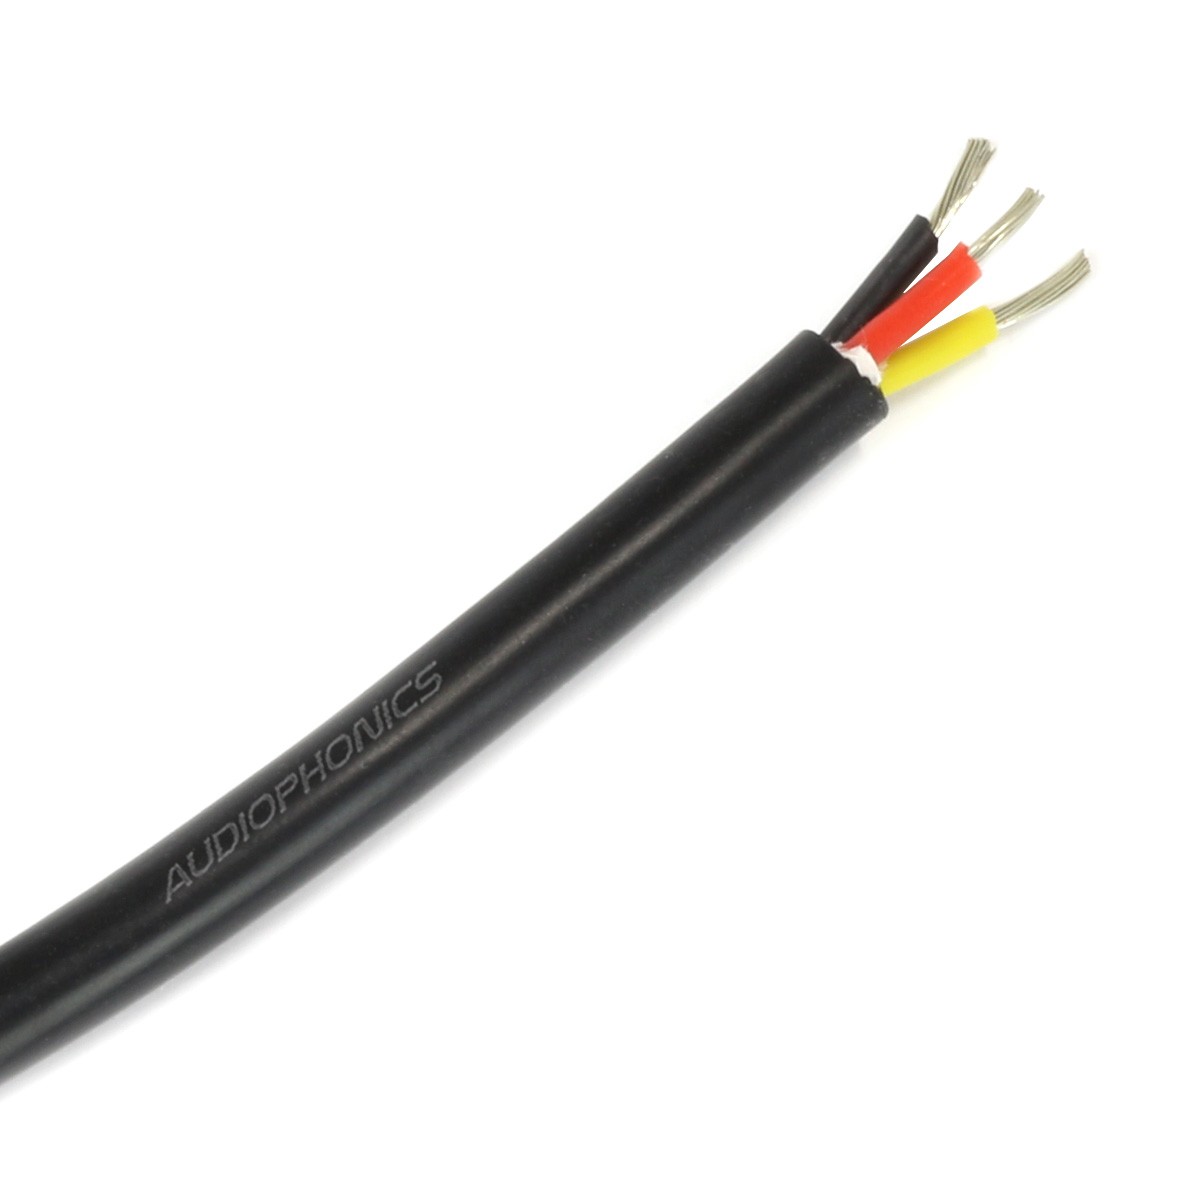 Cable Triple Conductor Silicon 1mm² Black